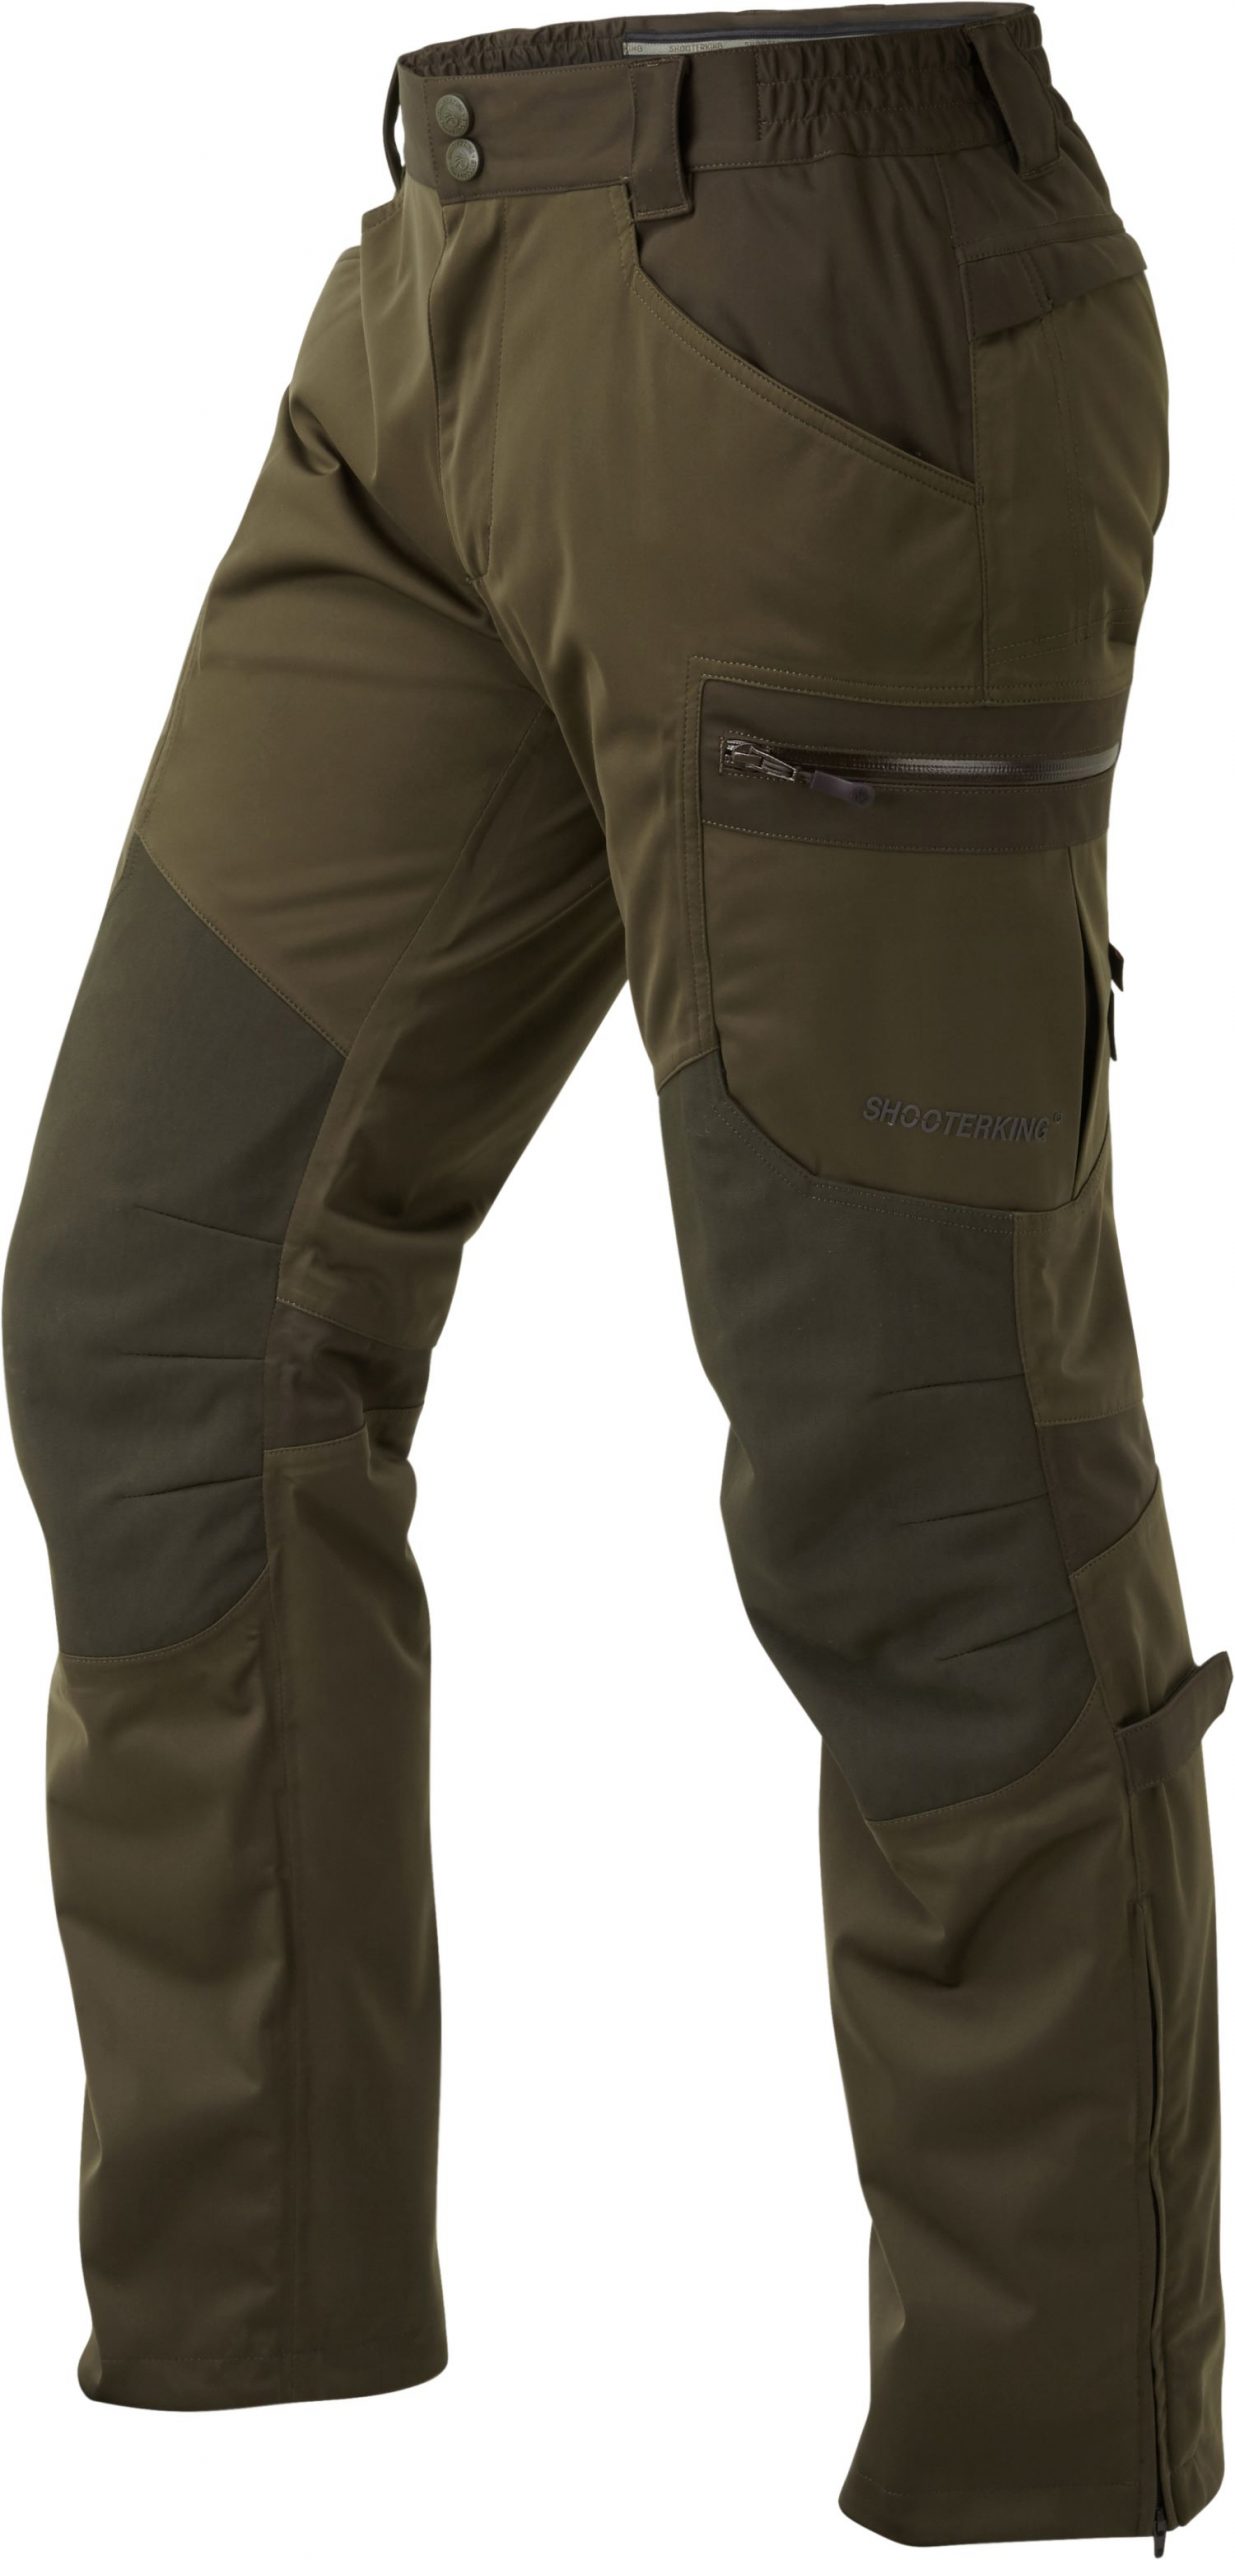 ShooterKing Men's Huntflex Trousers - Brown/Olive - Edinburgh Outdoor Wear